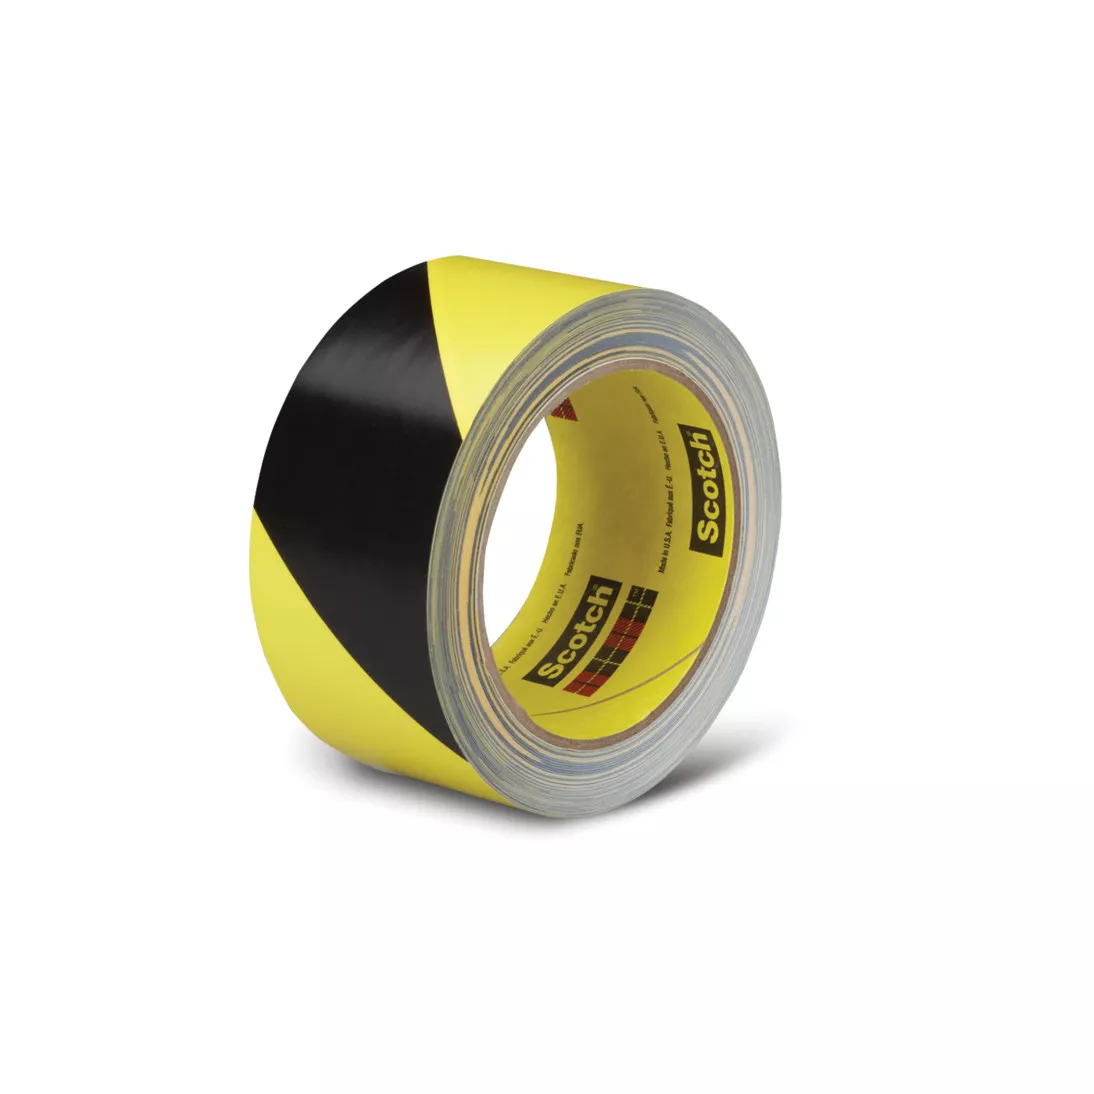 3M™ Safety Stripe Tape 5702, Black/Yellow, 48 in x 36 yd, 5.4 mil, 4
rolls per case